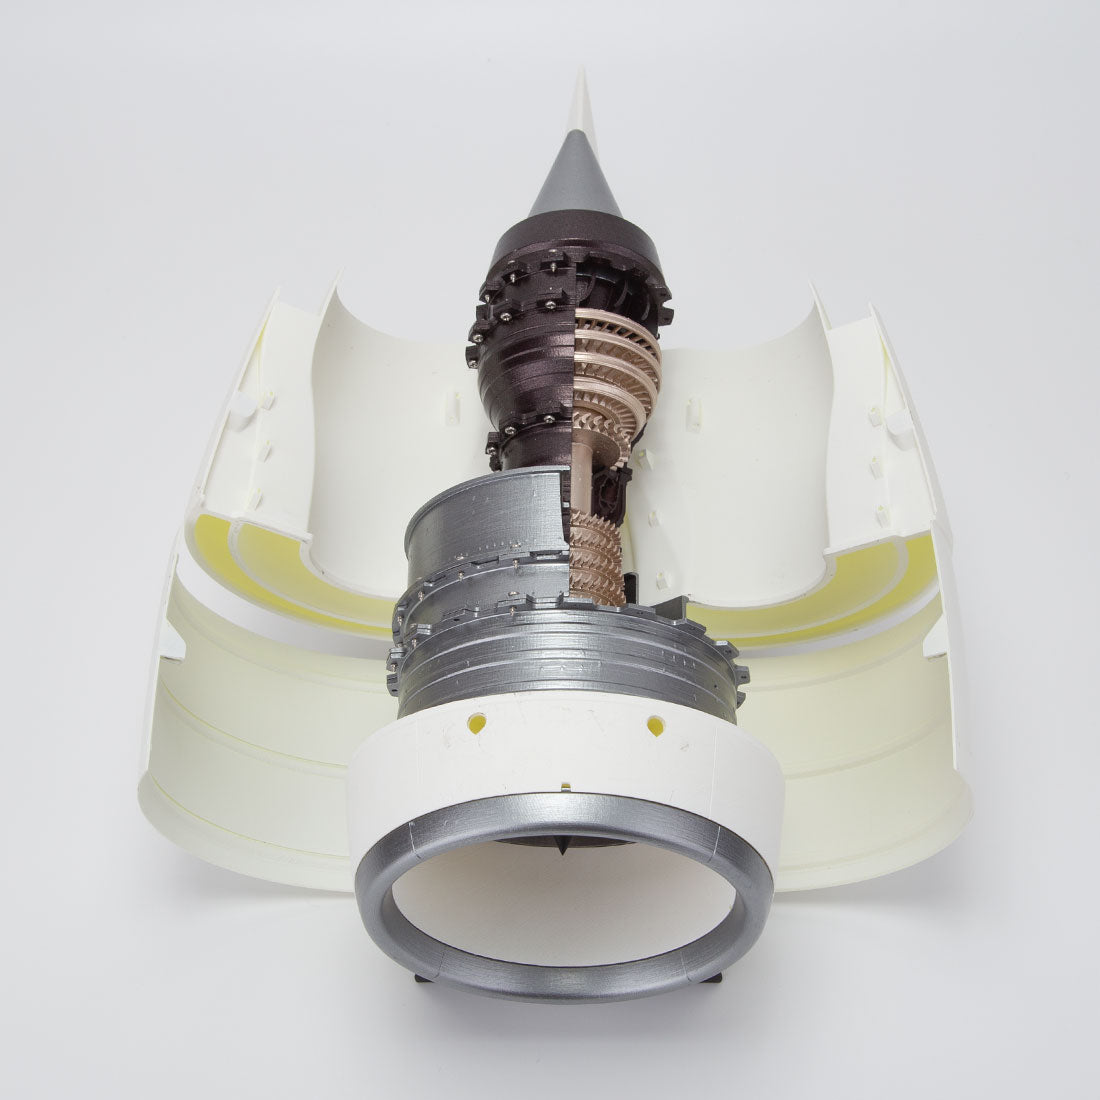 SKYMECHMAN NTR-900 Turbofan Engine Model Kit that Works - Build Your Own Turbofan Engine